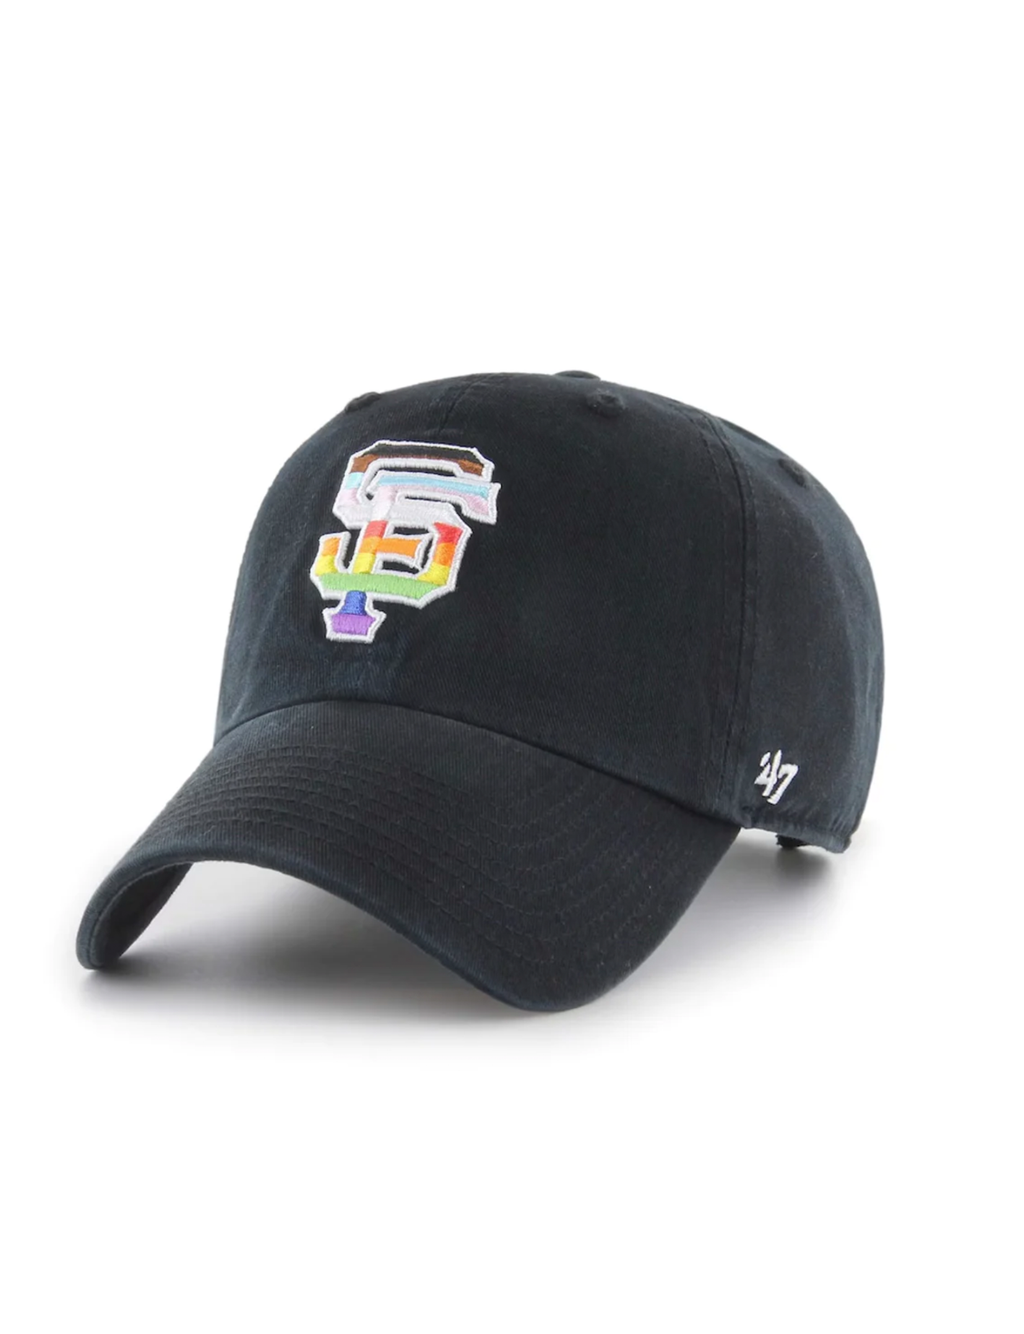 SF Giants Pride Basic Ball Cap, Black/Rainbow